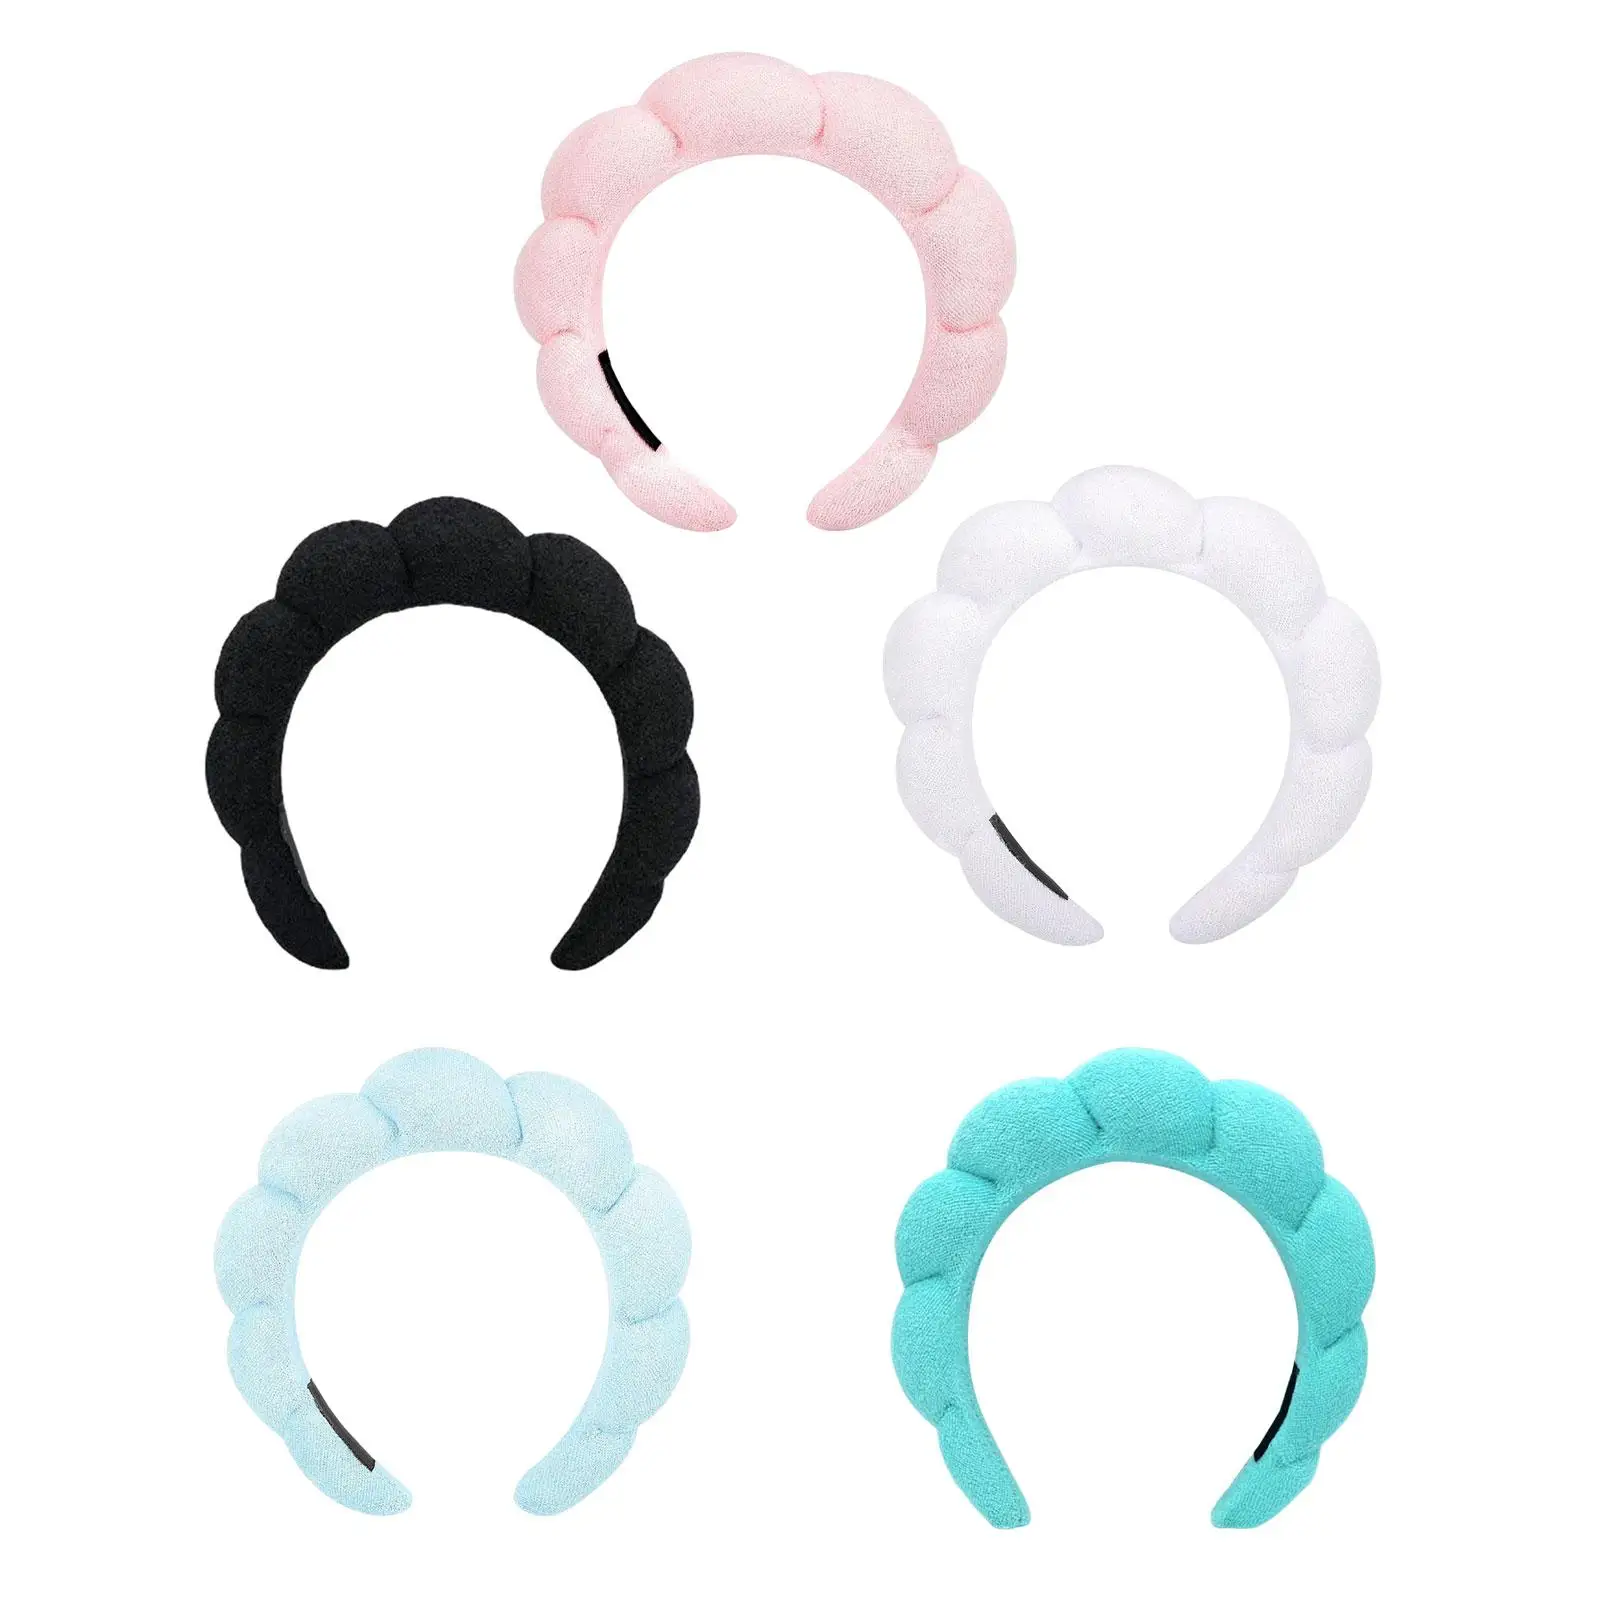 Sponge Headband Hairband Cute Headwear Hair Accessory for Skincare SPA Bath Daily Wear